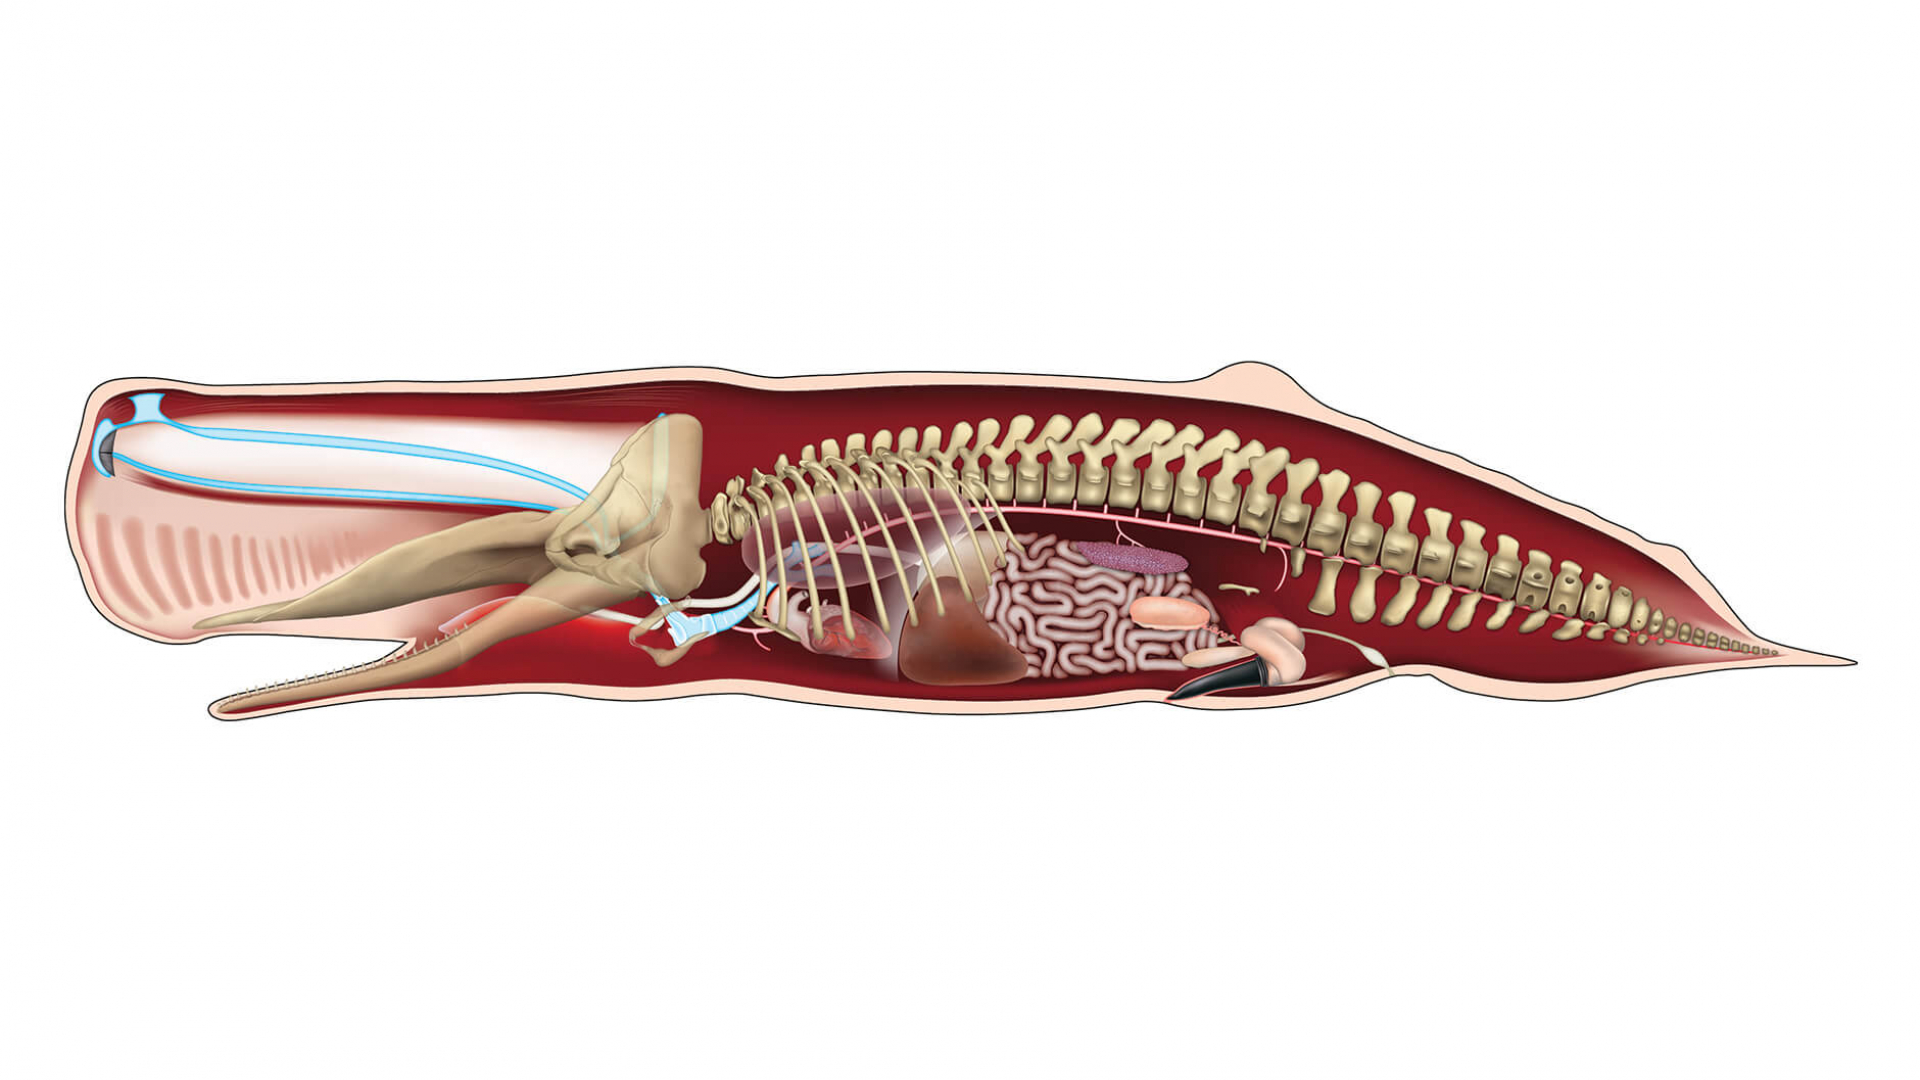 Sperm whale anatomy illustration.